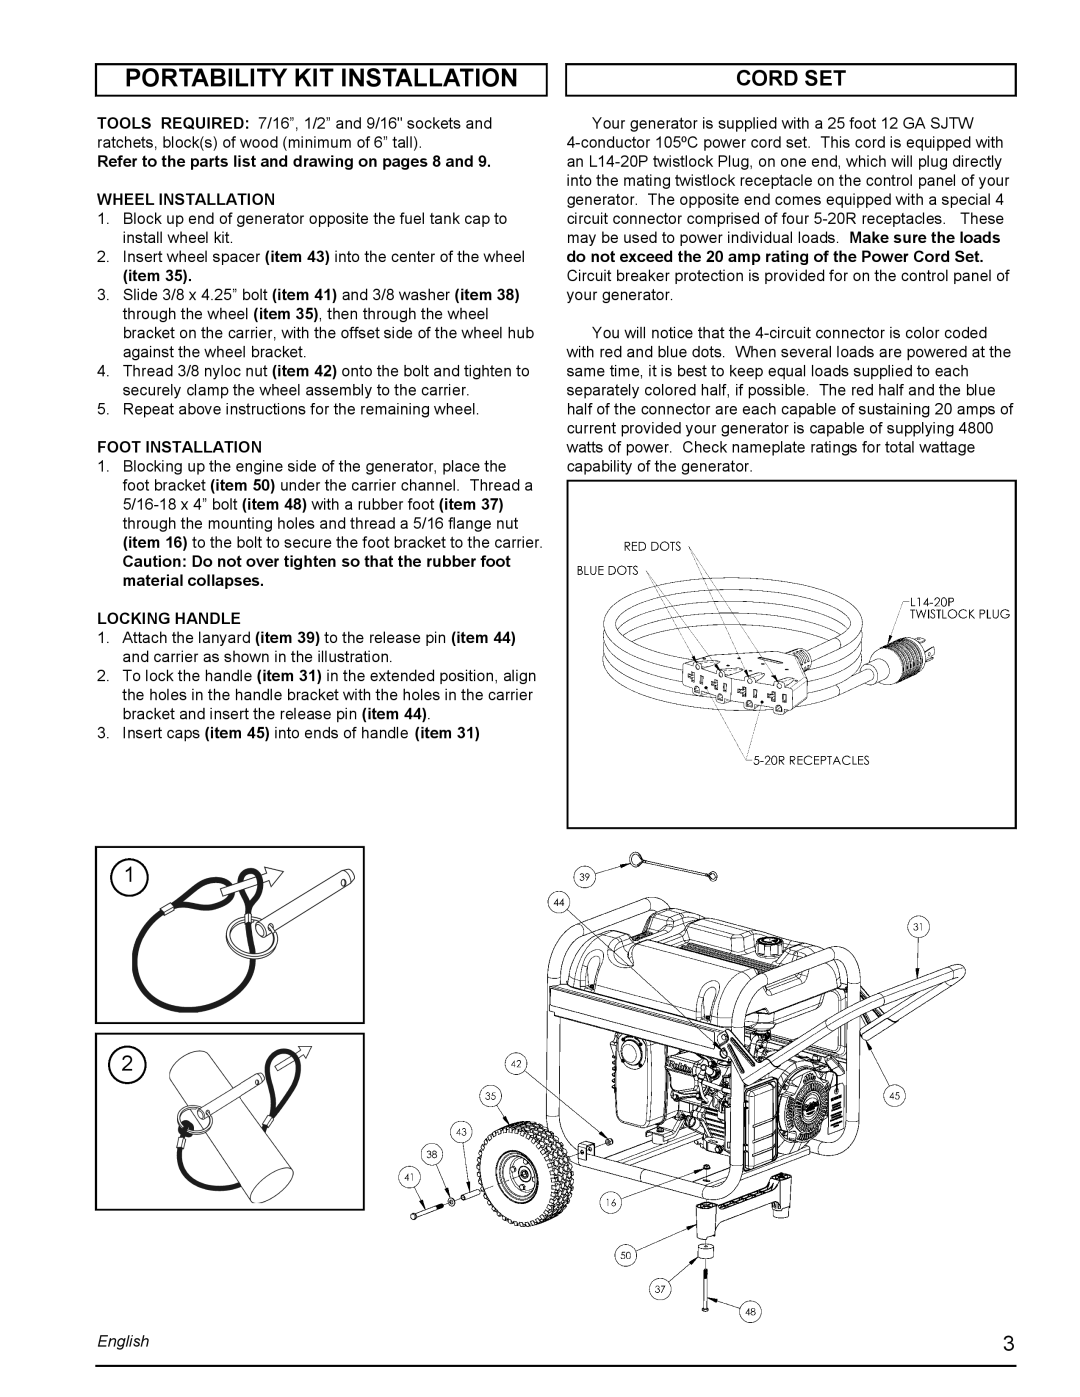 Powermate PMC435001 manual Portability Kit Installation, Cord Set, English 